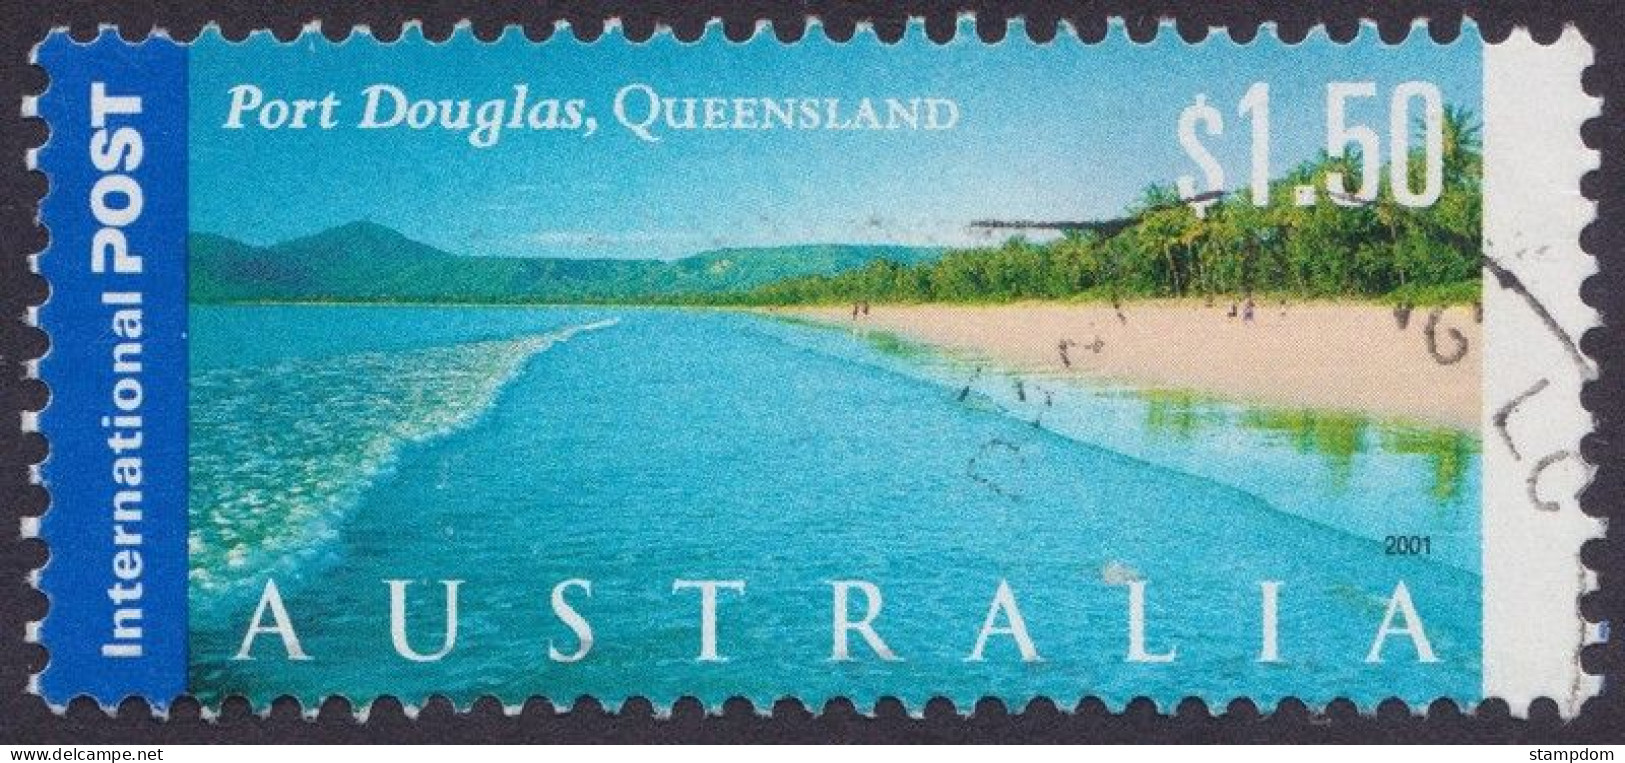 AUSTRALIA 2001 Tourist Attractions $1.50 Port Douglas Sc#1981 USED @O383 - Gebraucht